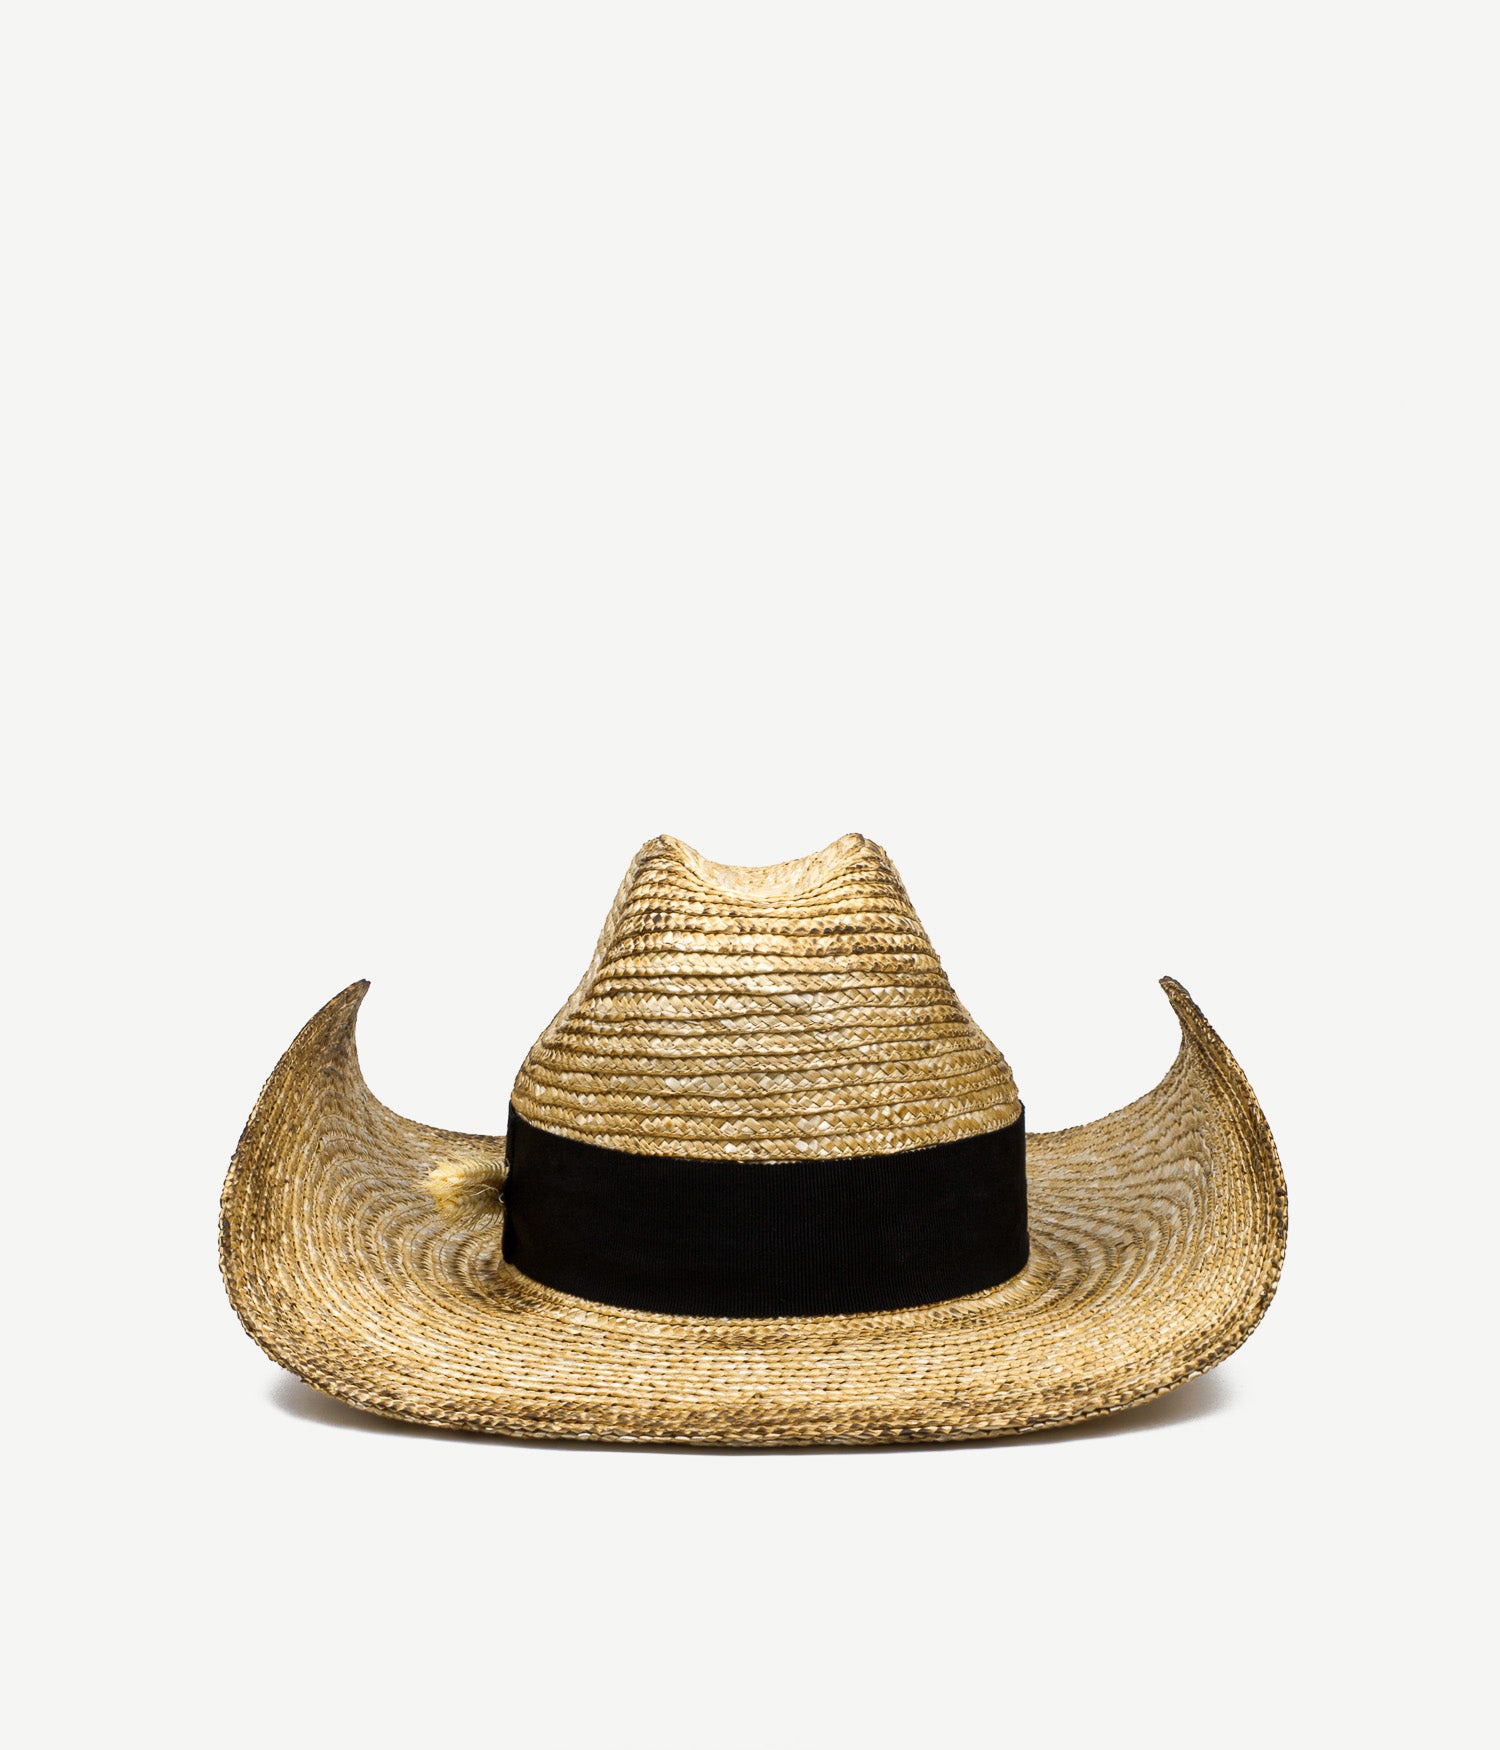 Wheat Spikes Embellished "Sunburnt" Cowboy Hat